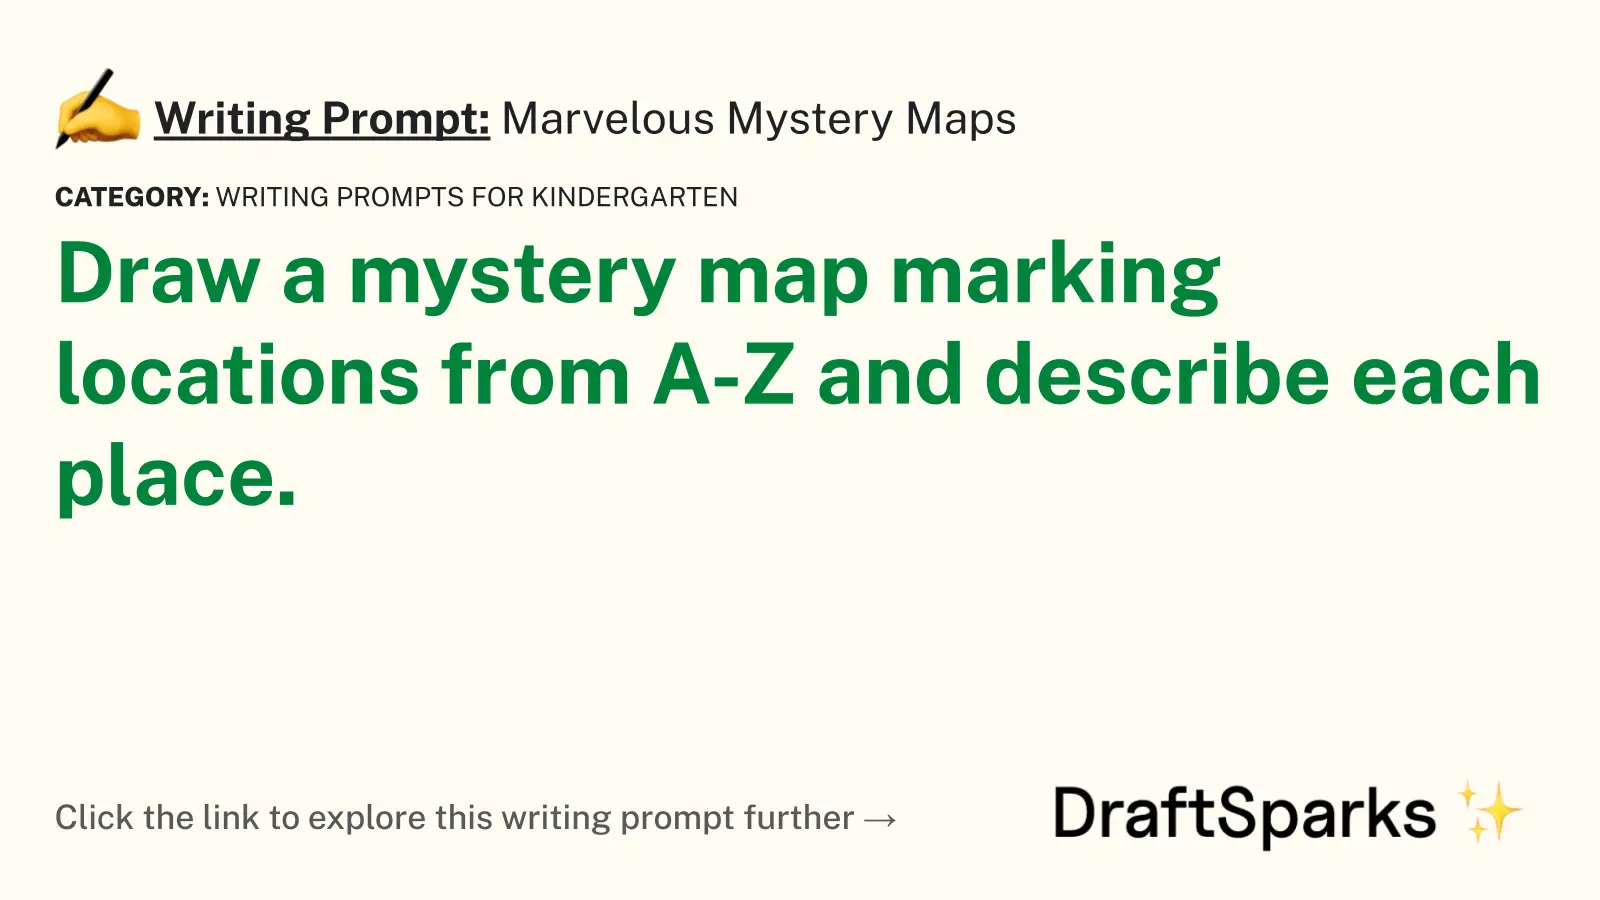 Marvelous Mystery Maps